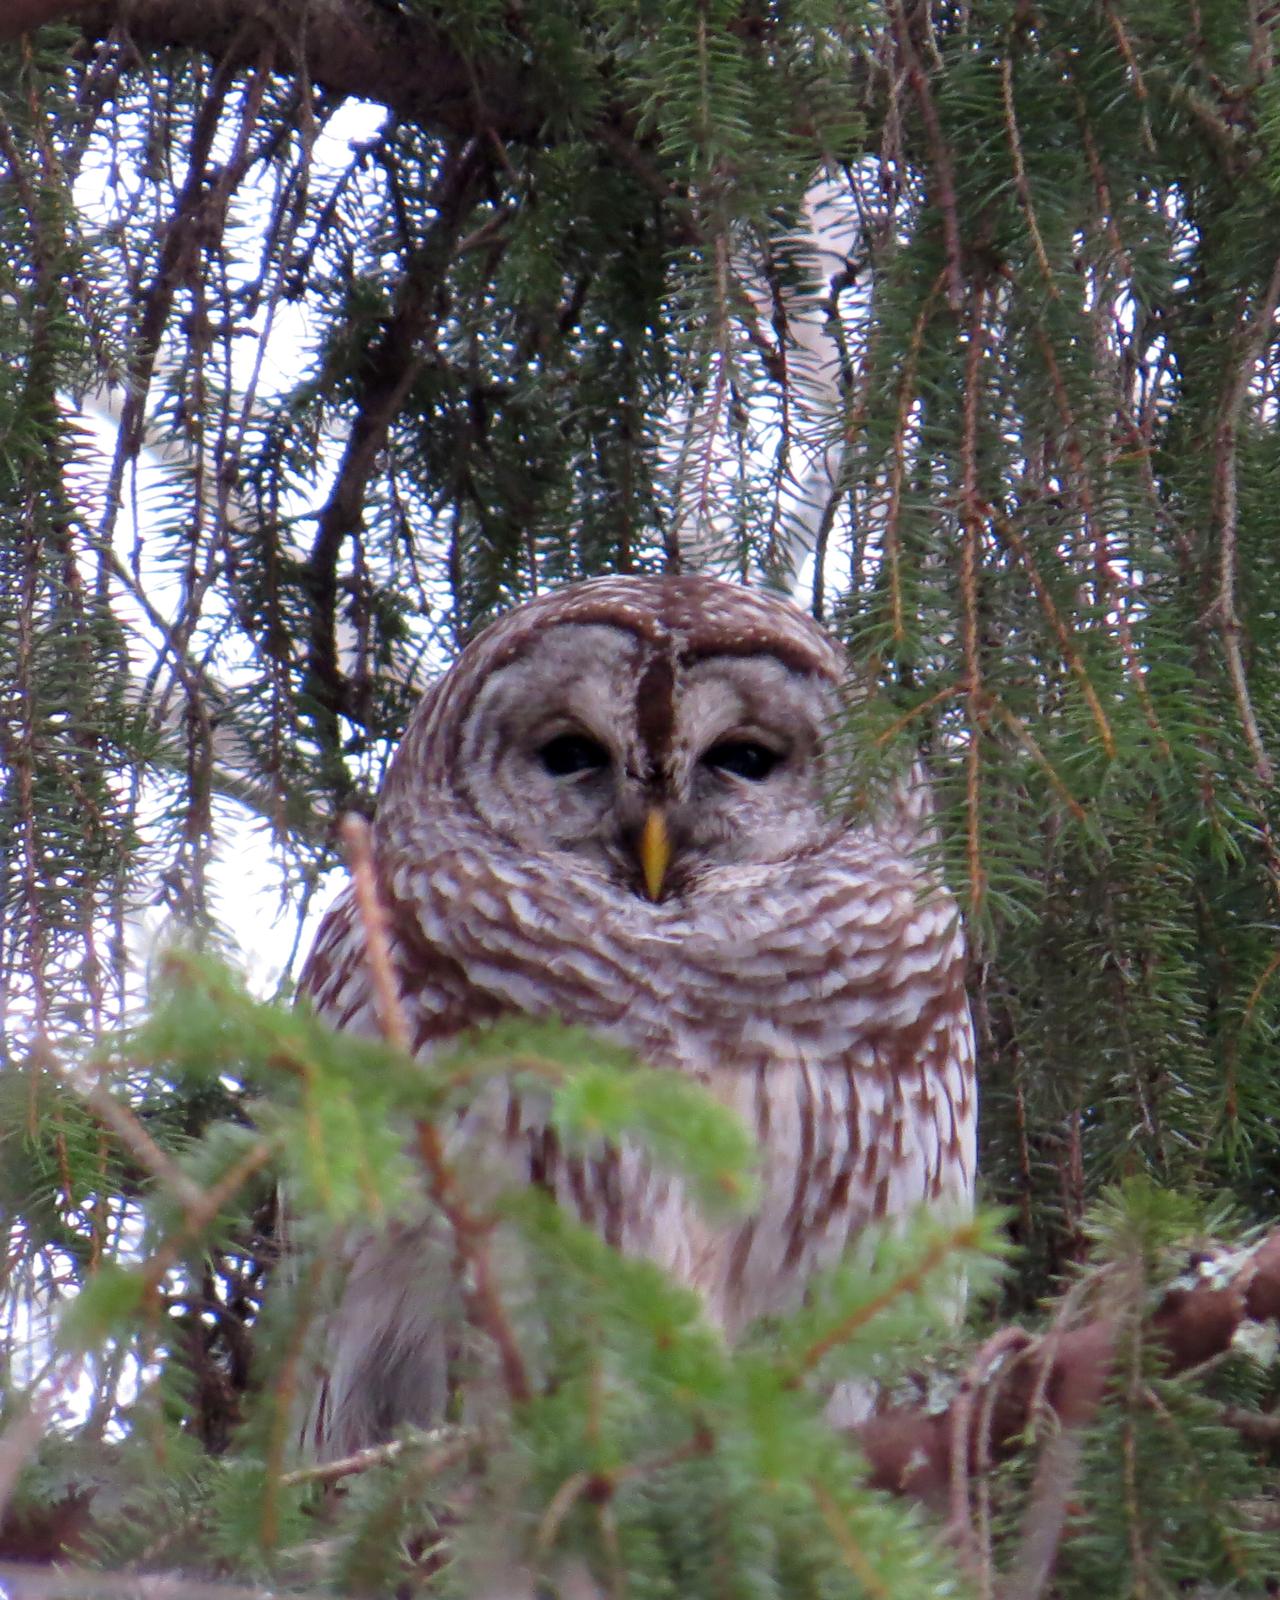 Barred Owl Photo by Zachary M. Batren